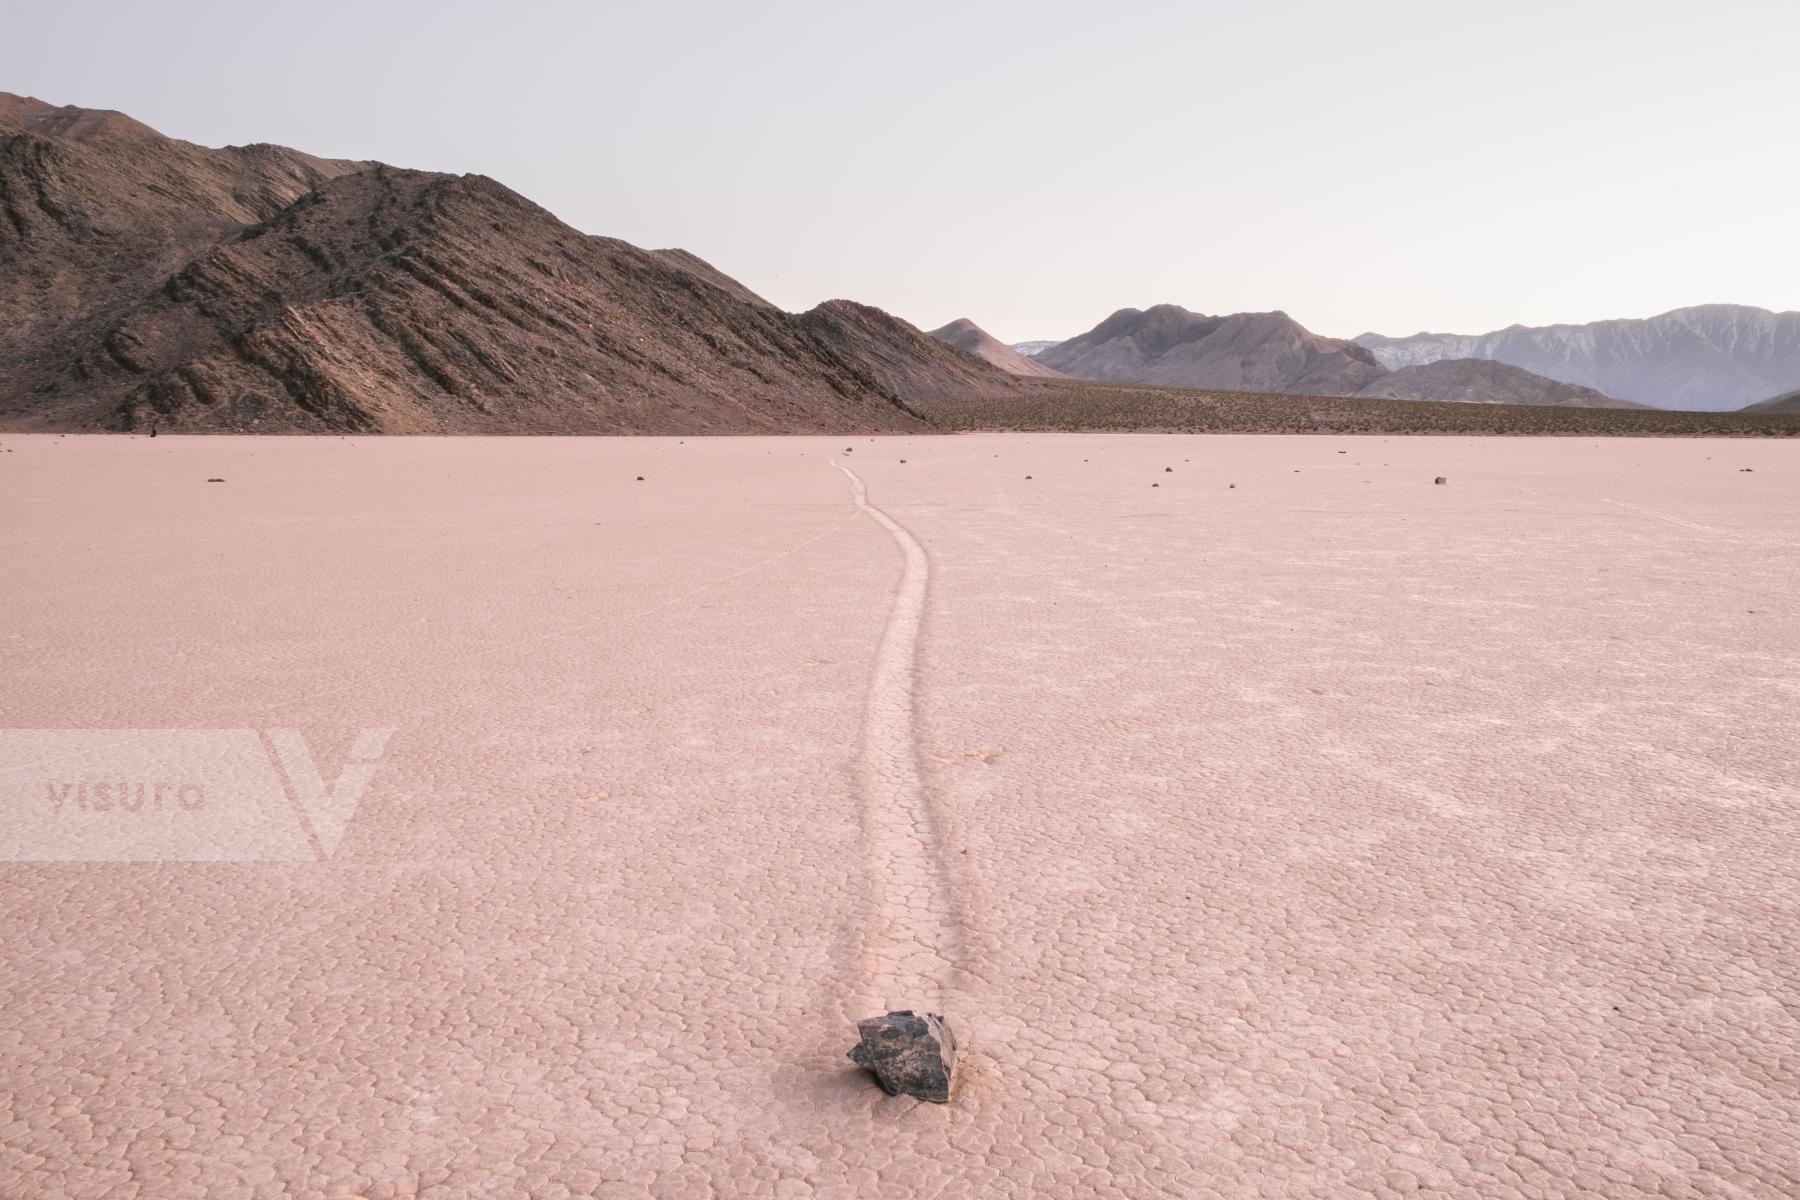 Purchase The Racetrack, Death Valley by Matt Propert